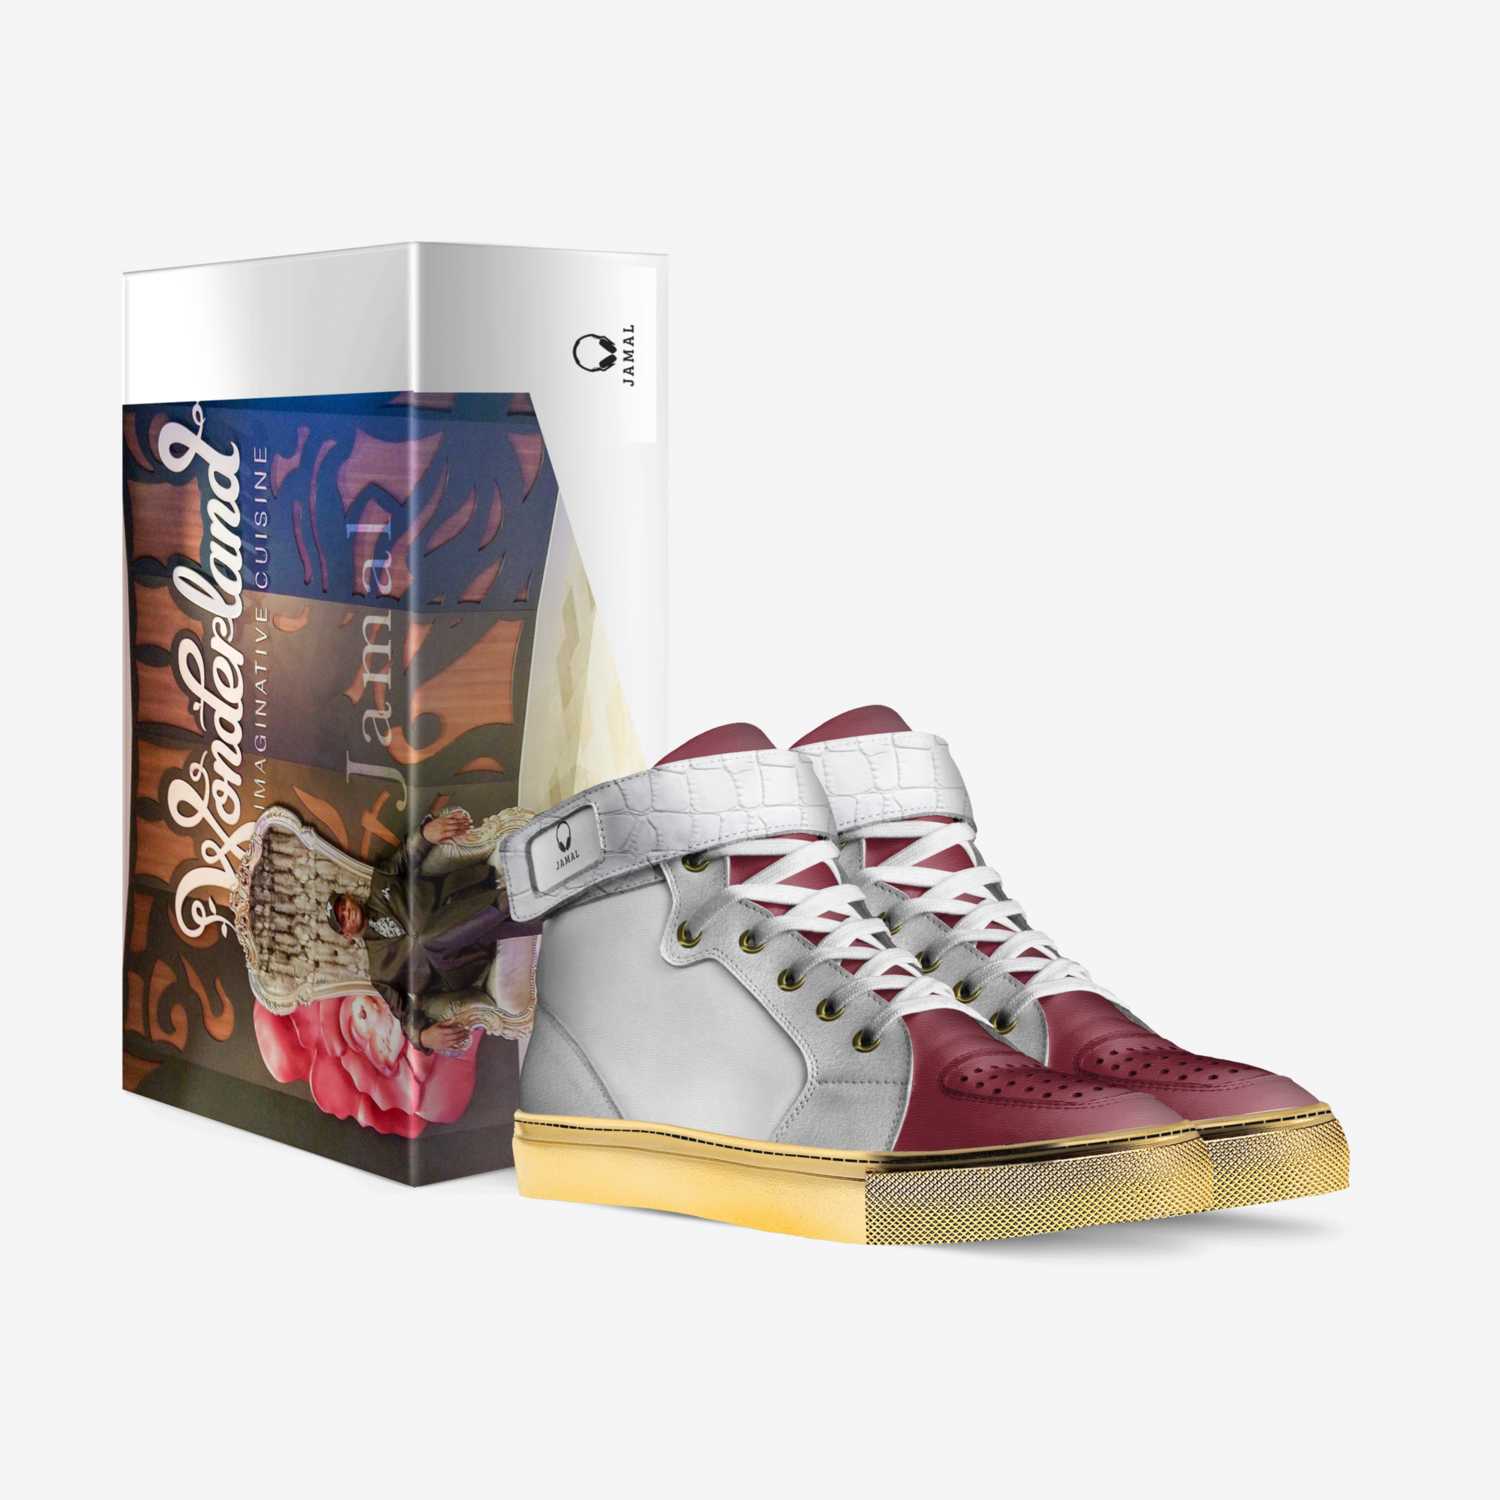 Jamal 1 custom made in Italy shoes by Antonio Jackson | Box view